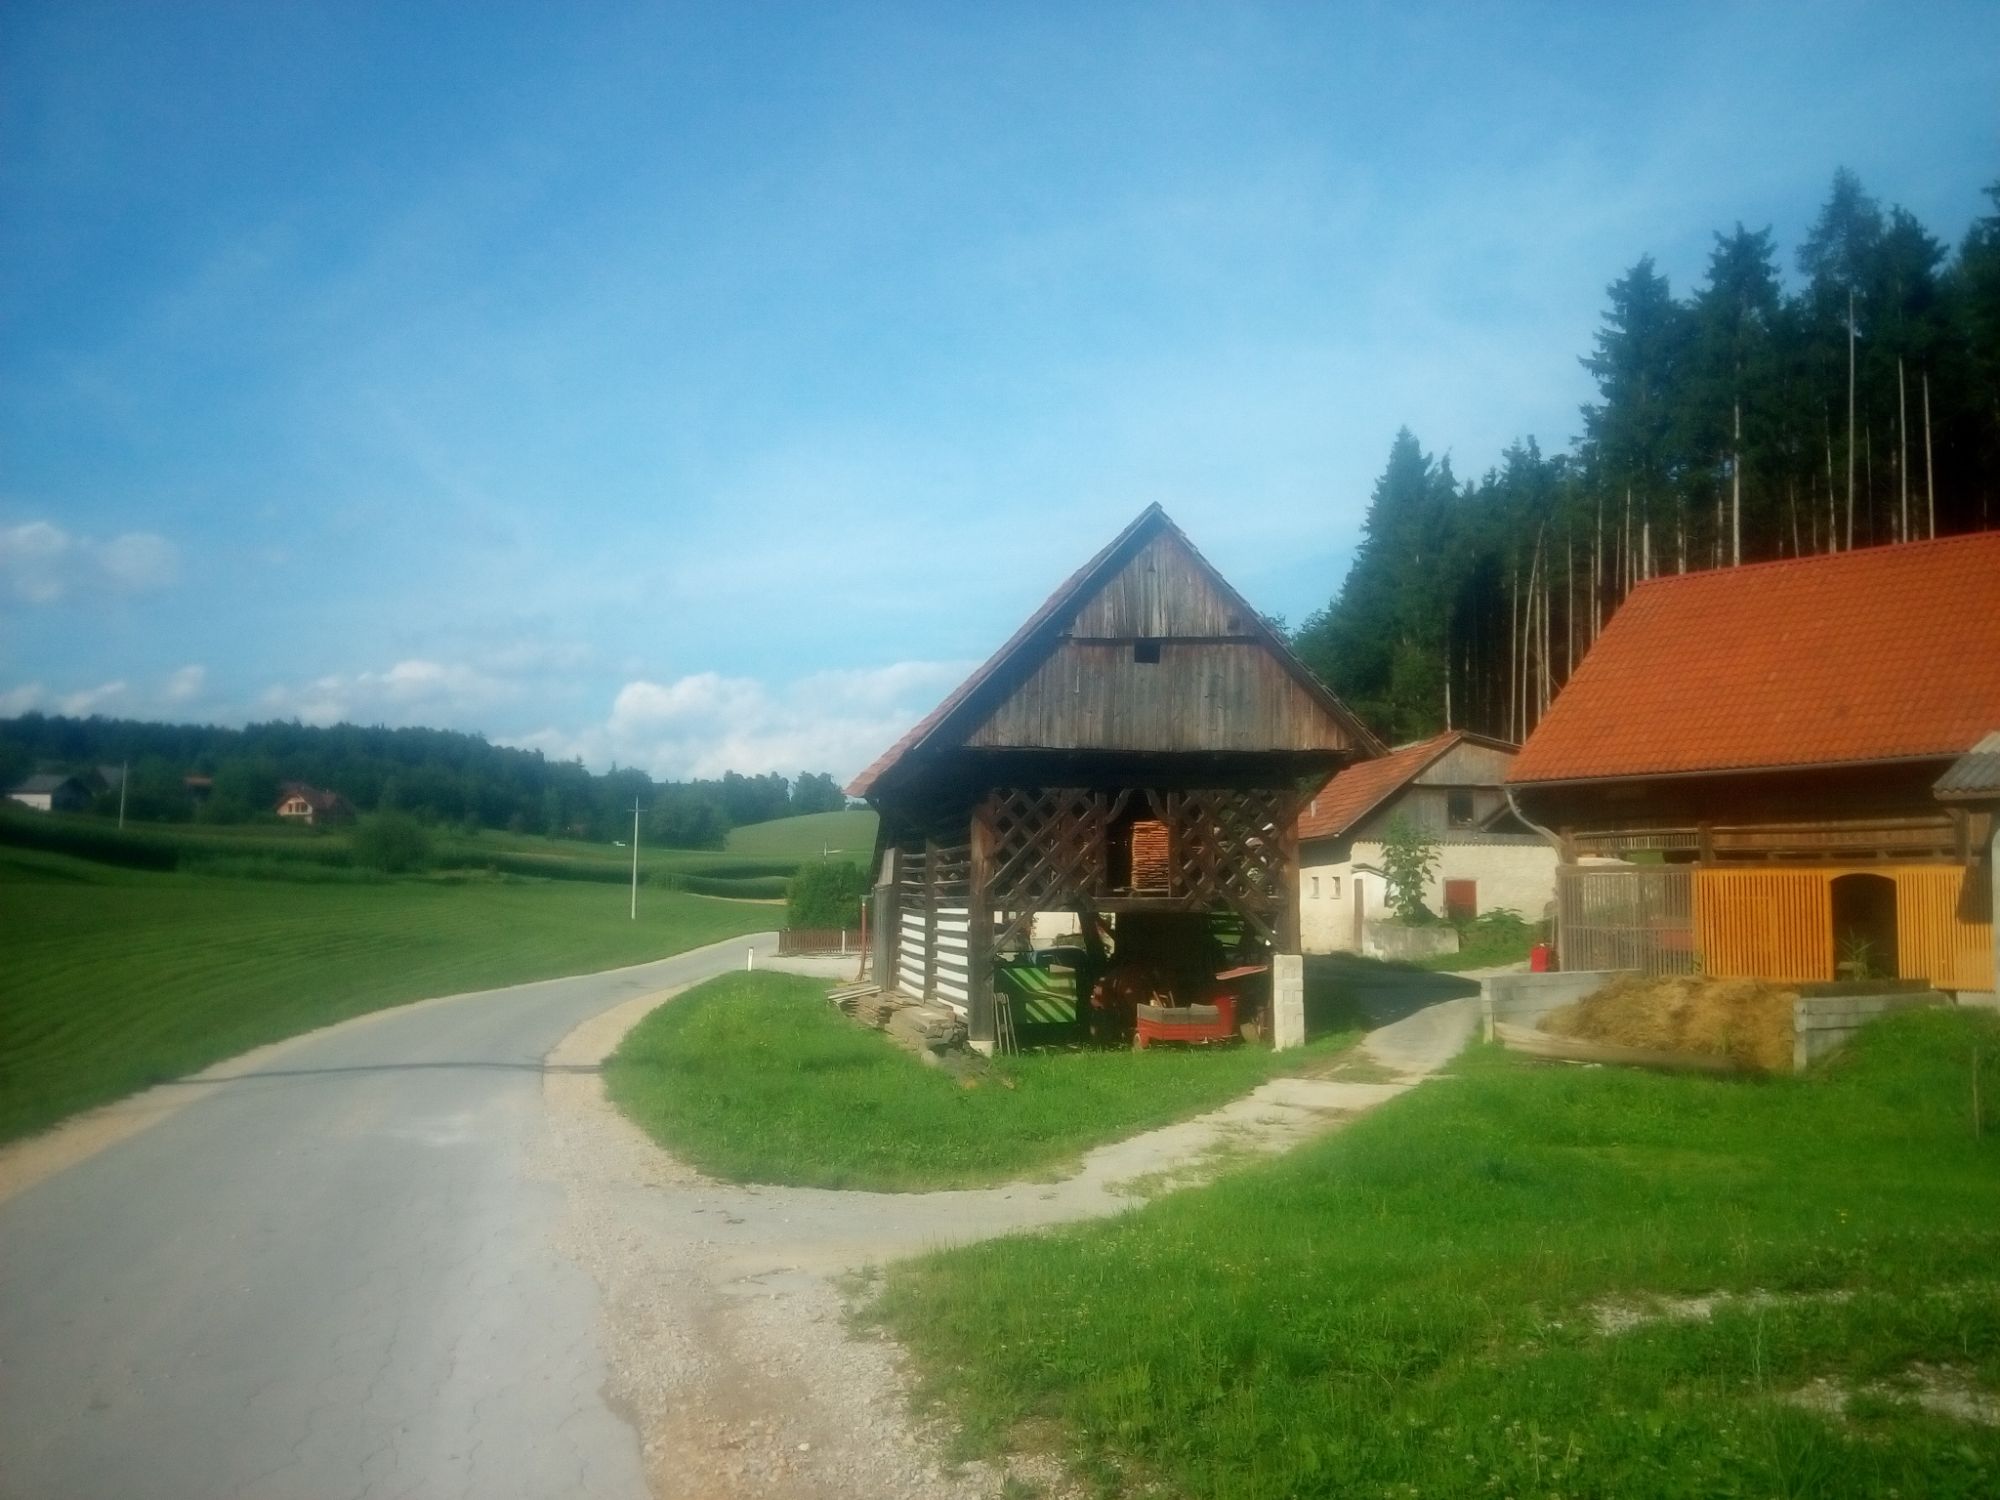 Slovenský ráz krajiny razil po pokosenej tráve